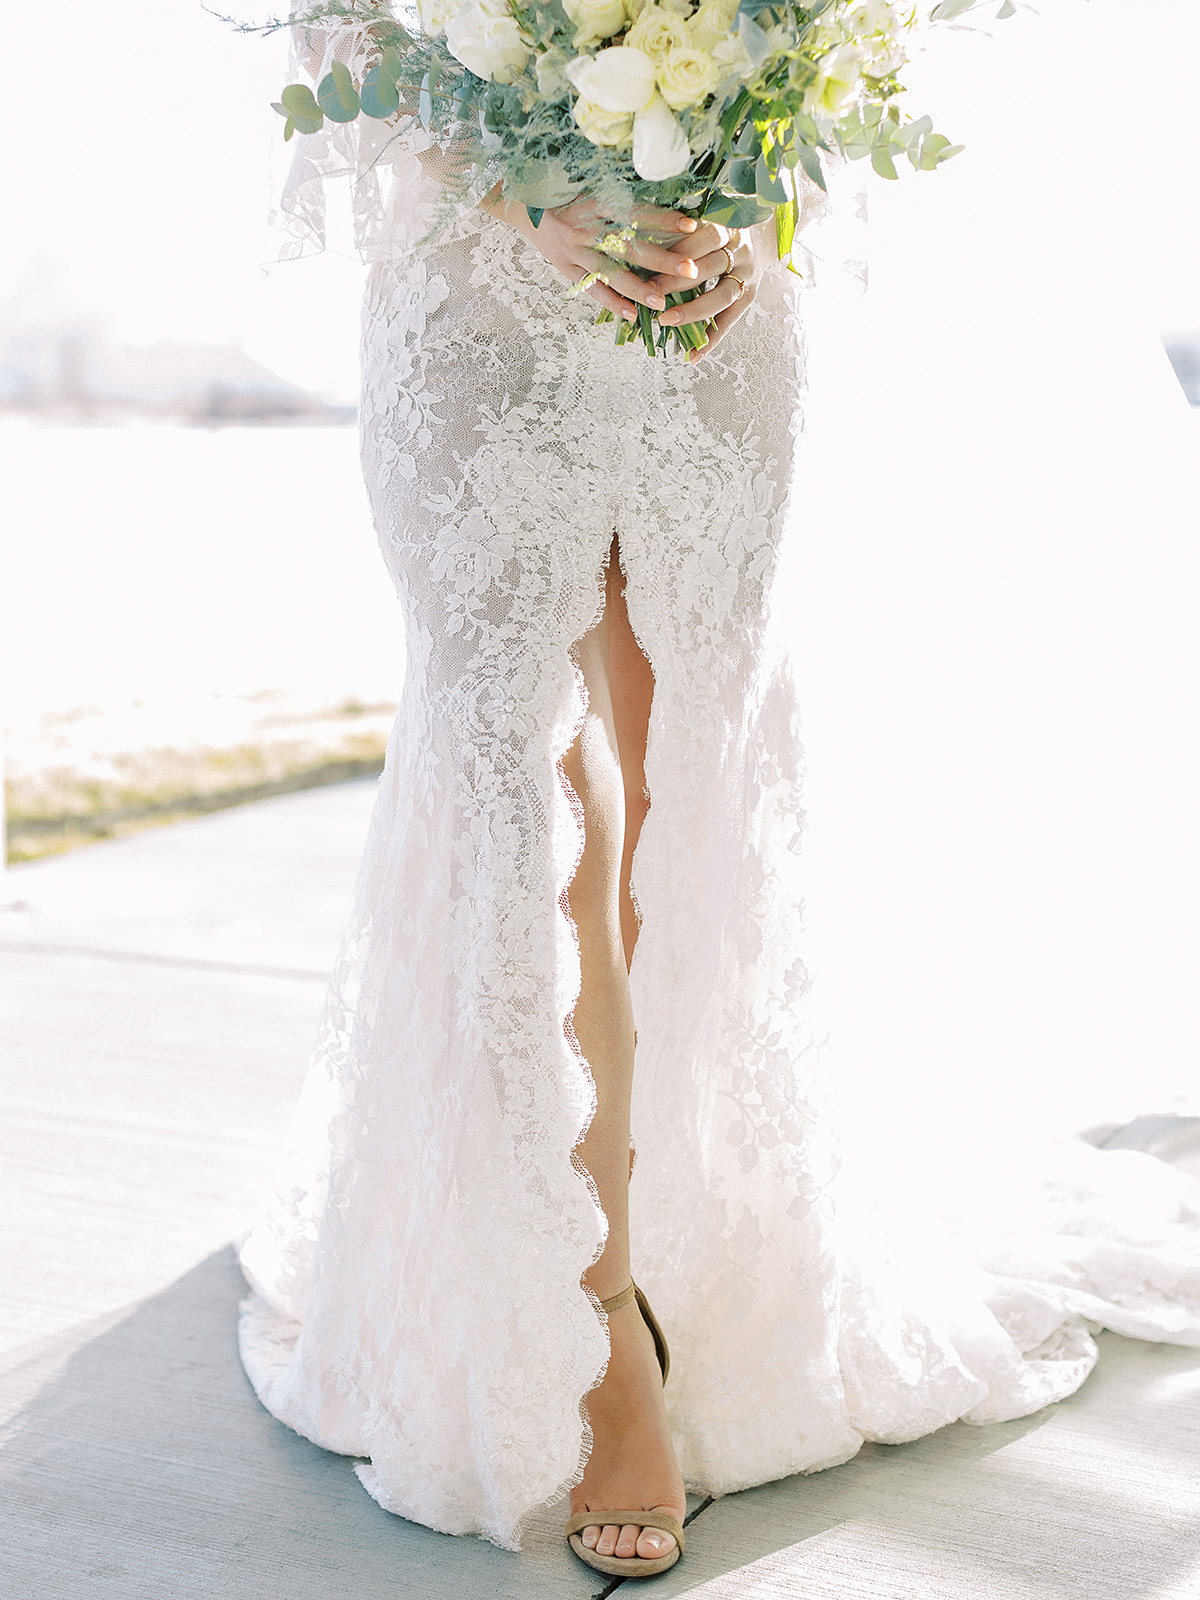 Alora Lani | Fine Art Wedding Photography | Based in Utah and Southern California